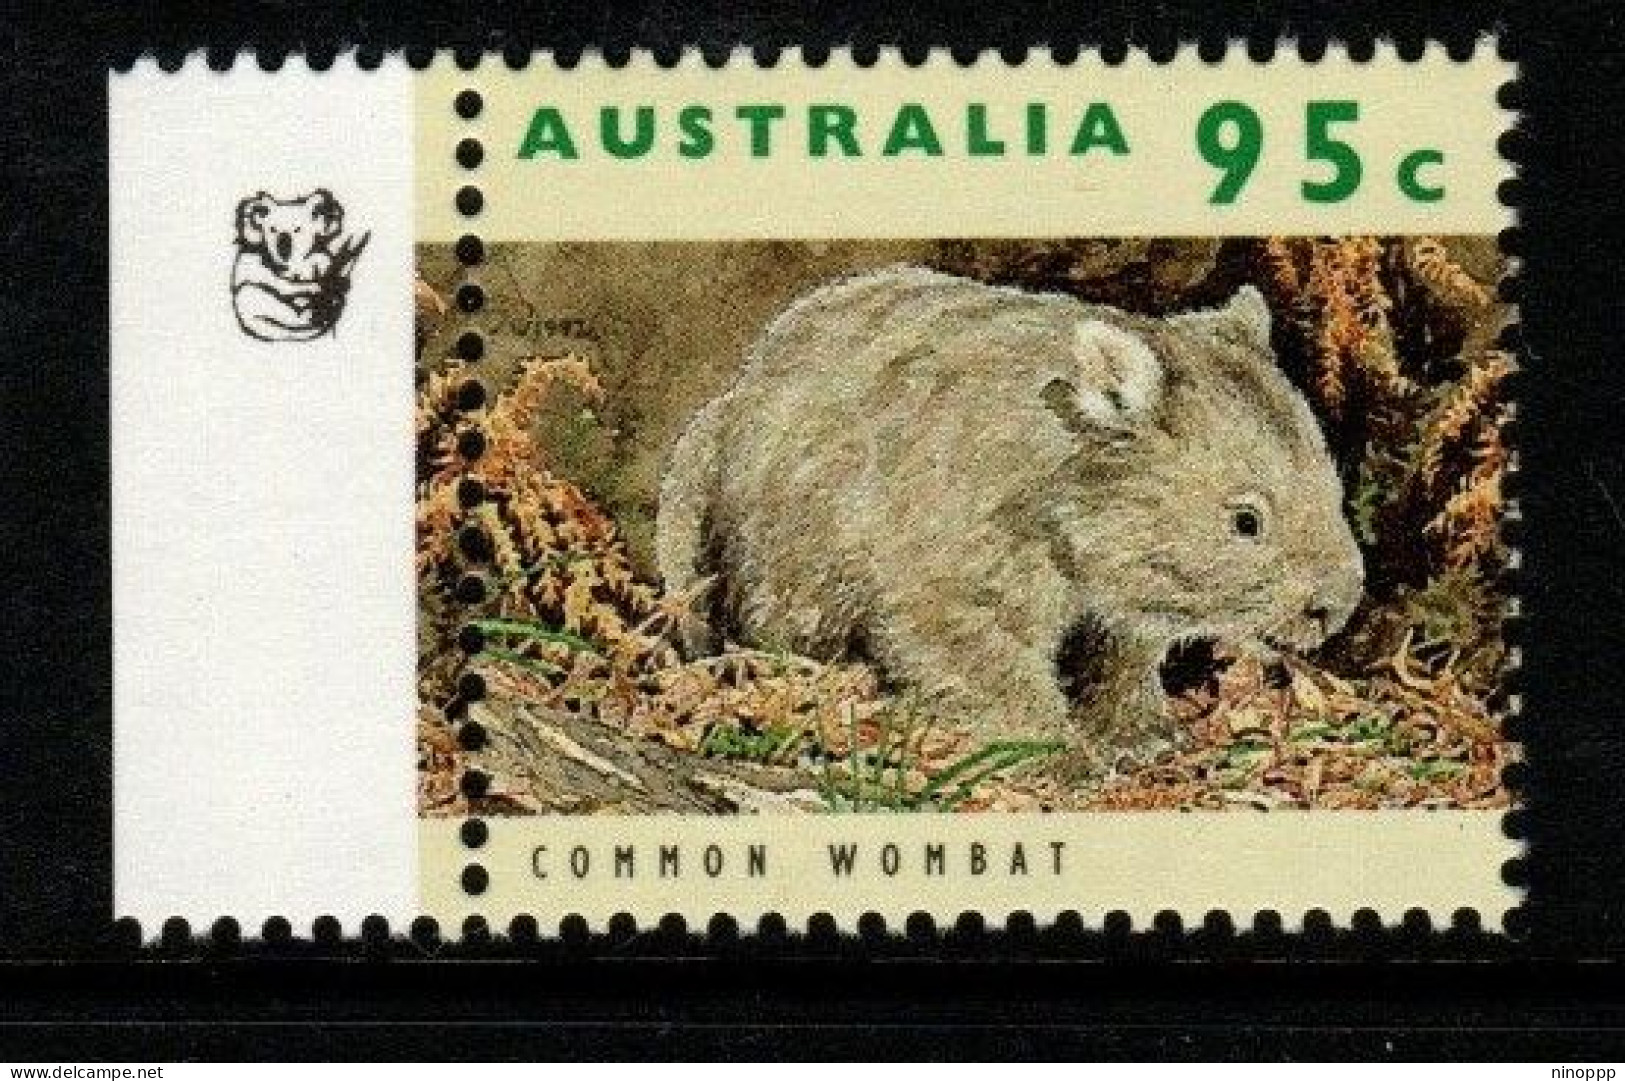 Australia Cat 1361a Wildlife  95c Common Wombat  , 1 Koalas Reprint,mint Never Hinged - Proofs & Reprints